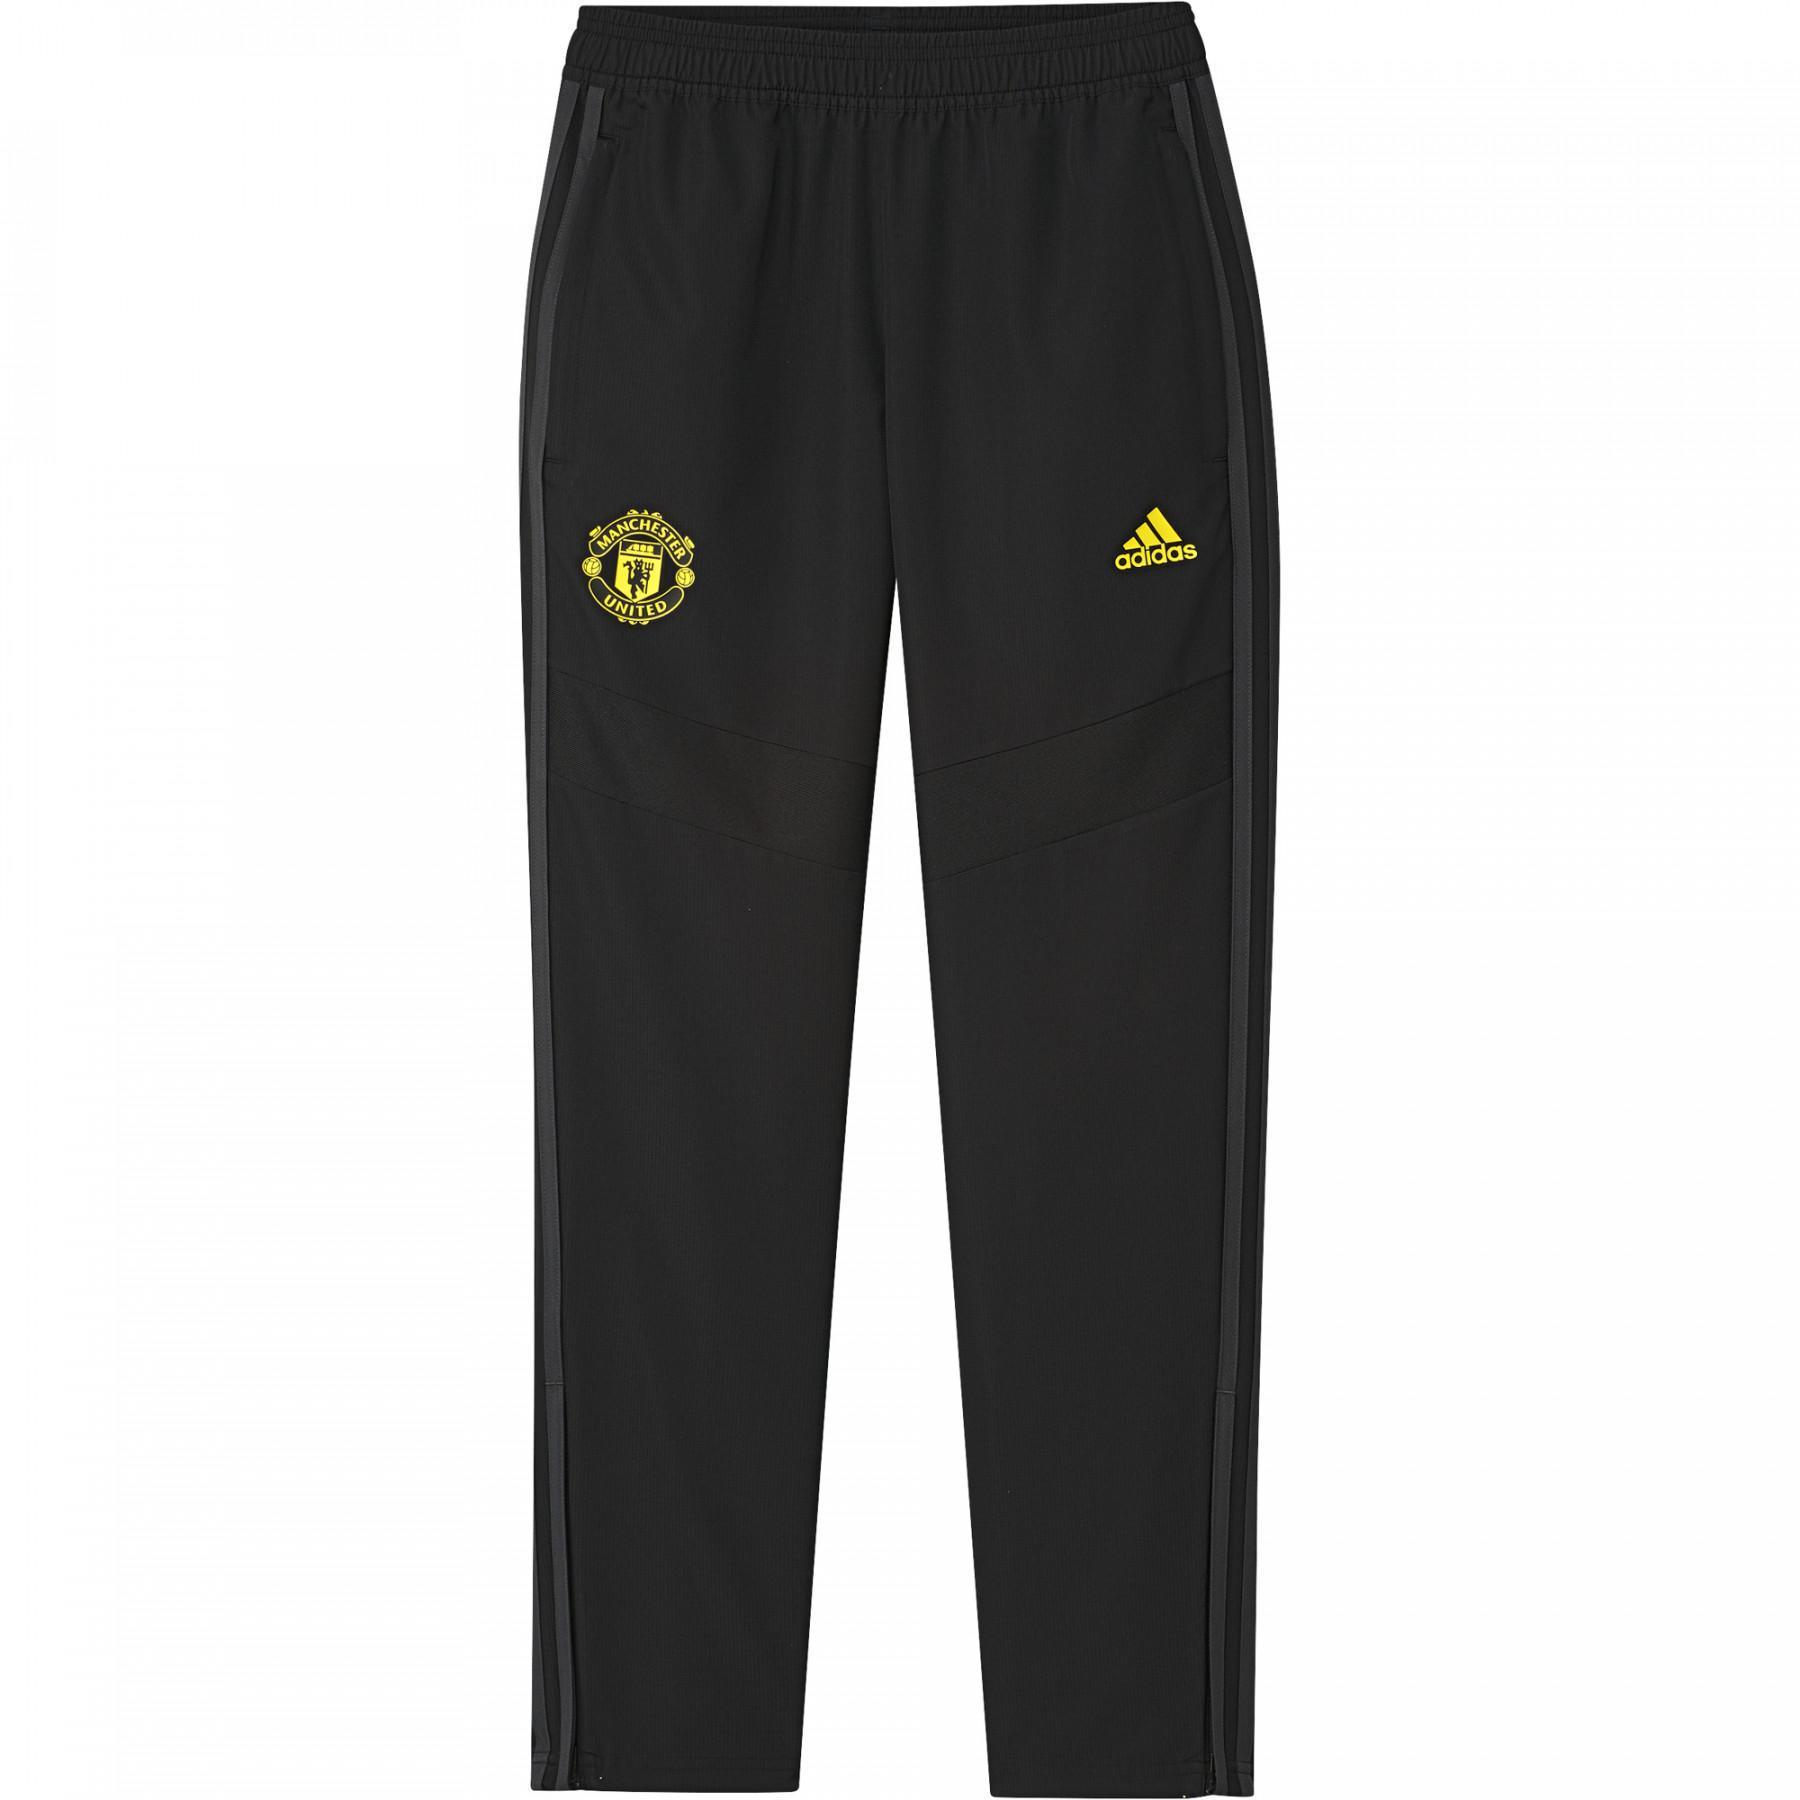 Children's sweatpants Manchester United 2019/20